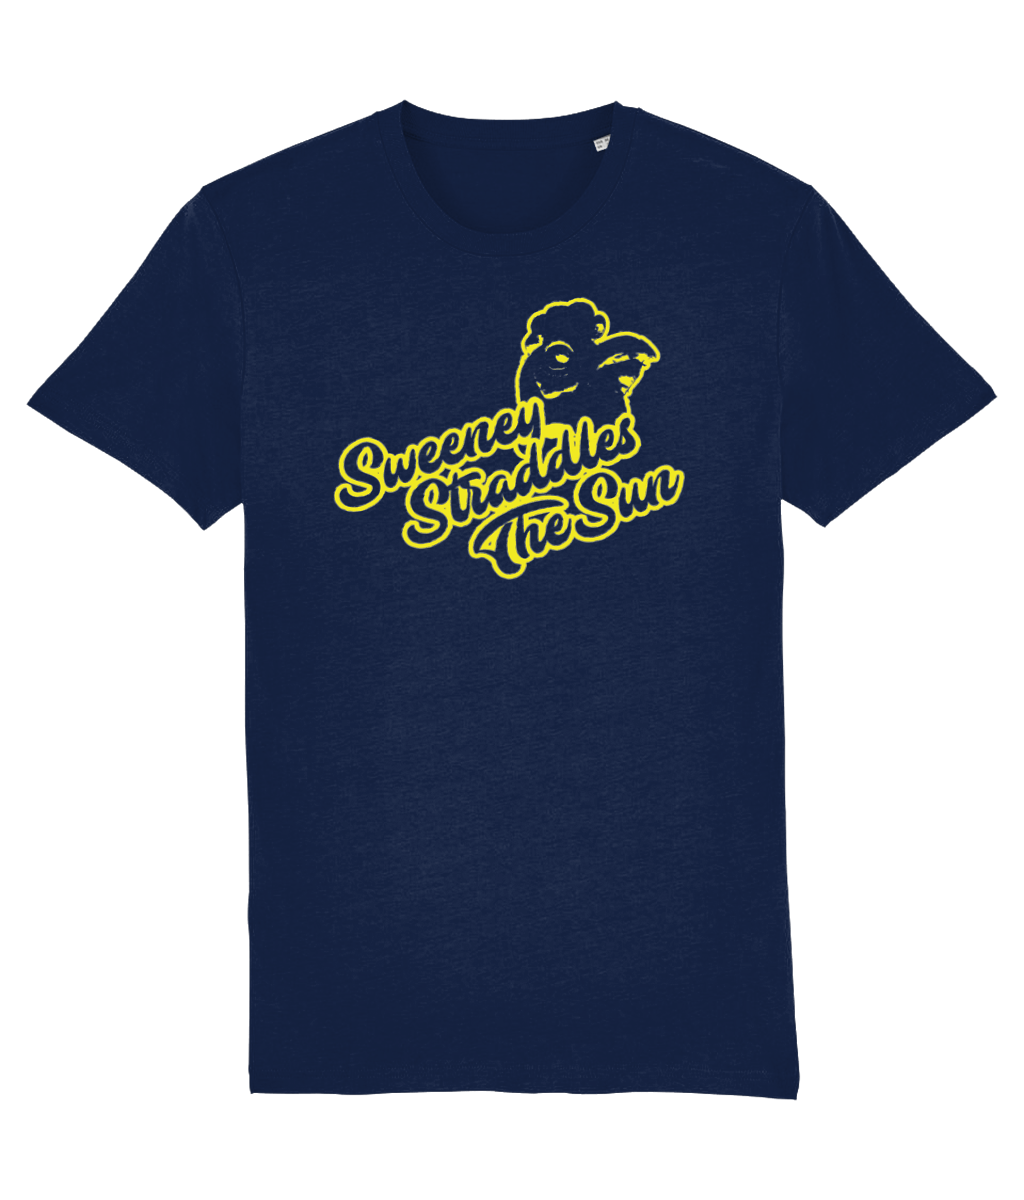 Sweeney Straddles The Sun T-shirt (Navy)